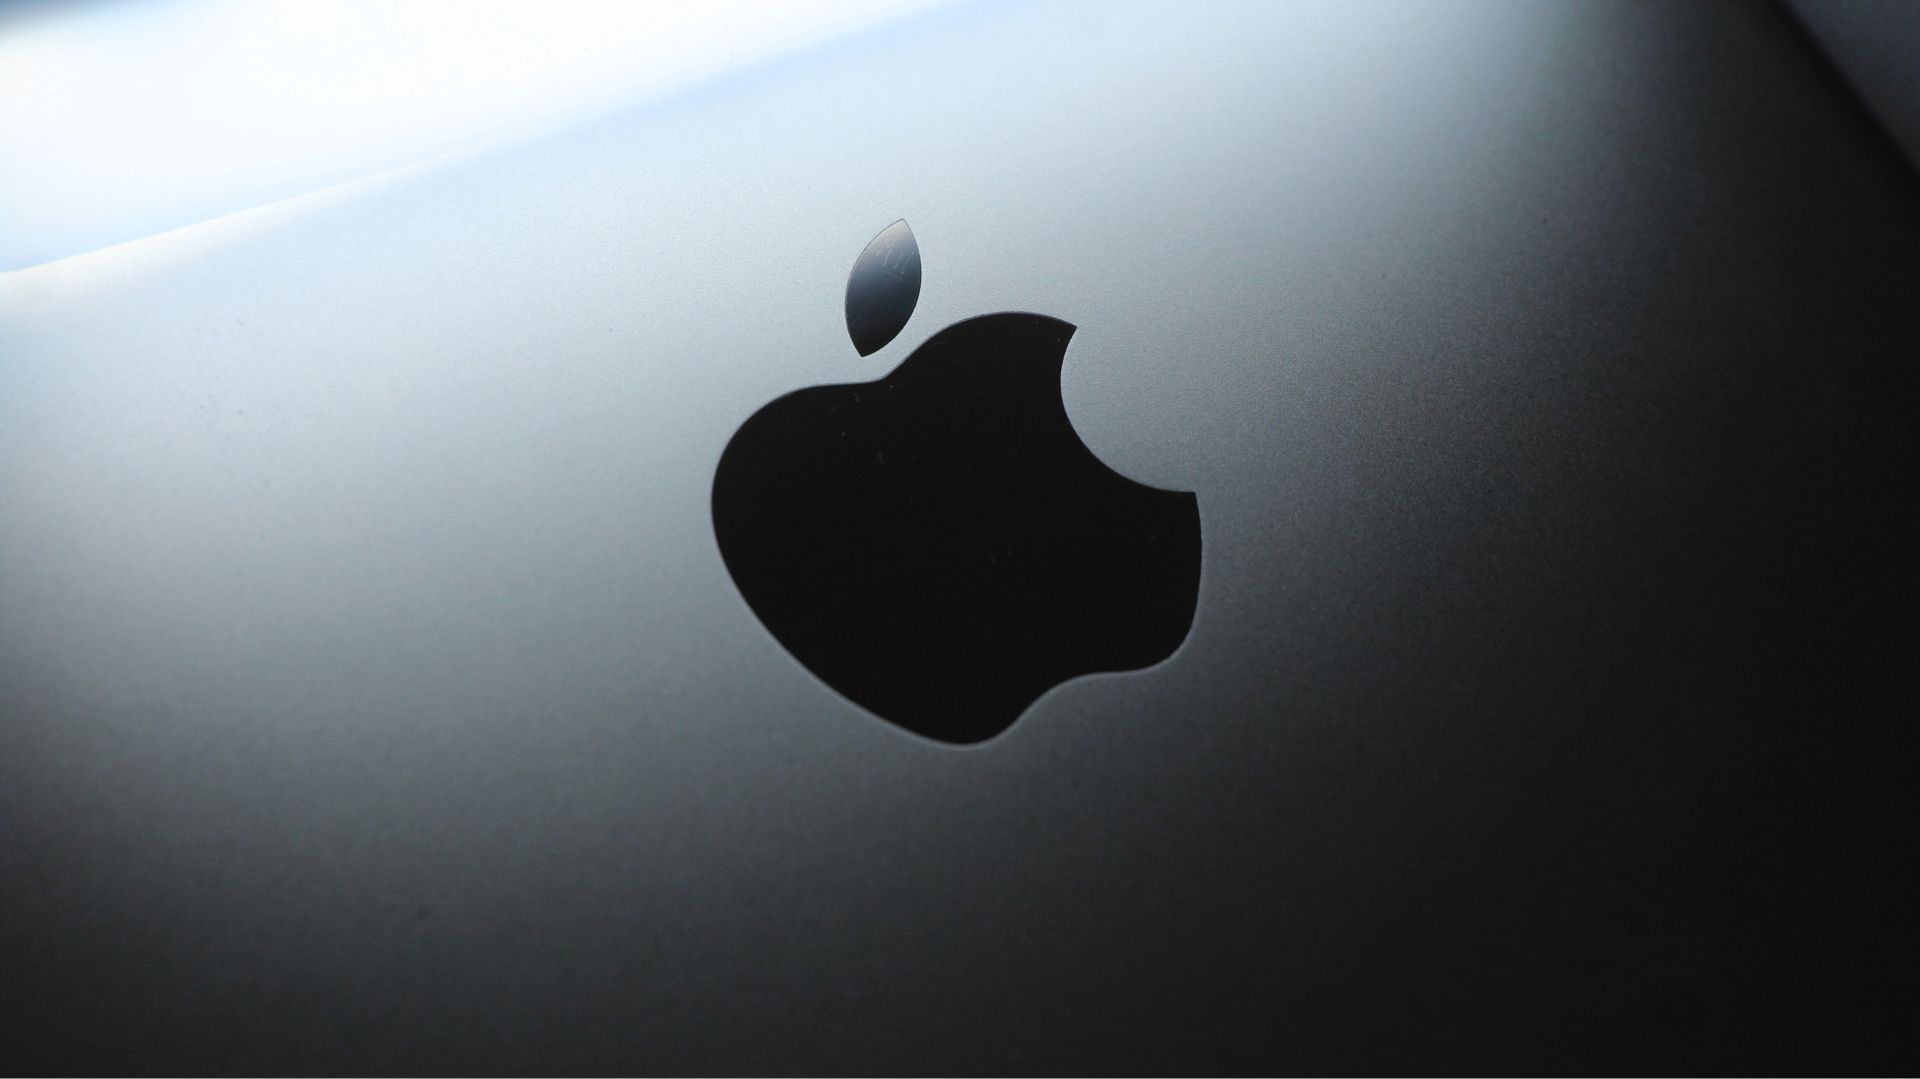 apple logo on macbook